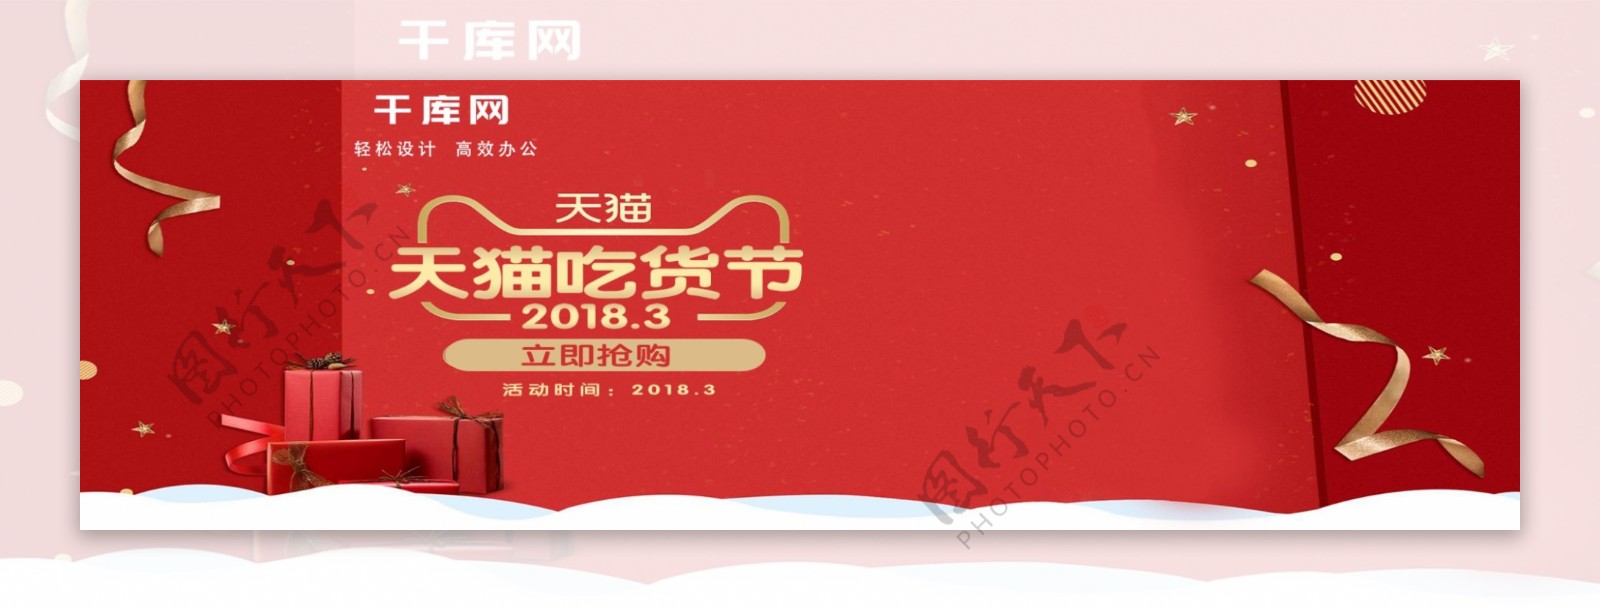 红色喜庆吃货节促销banner